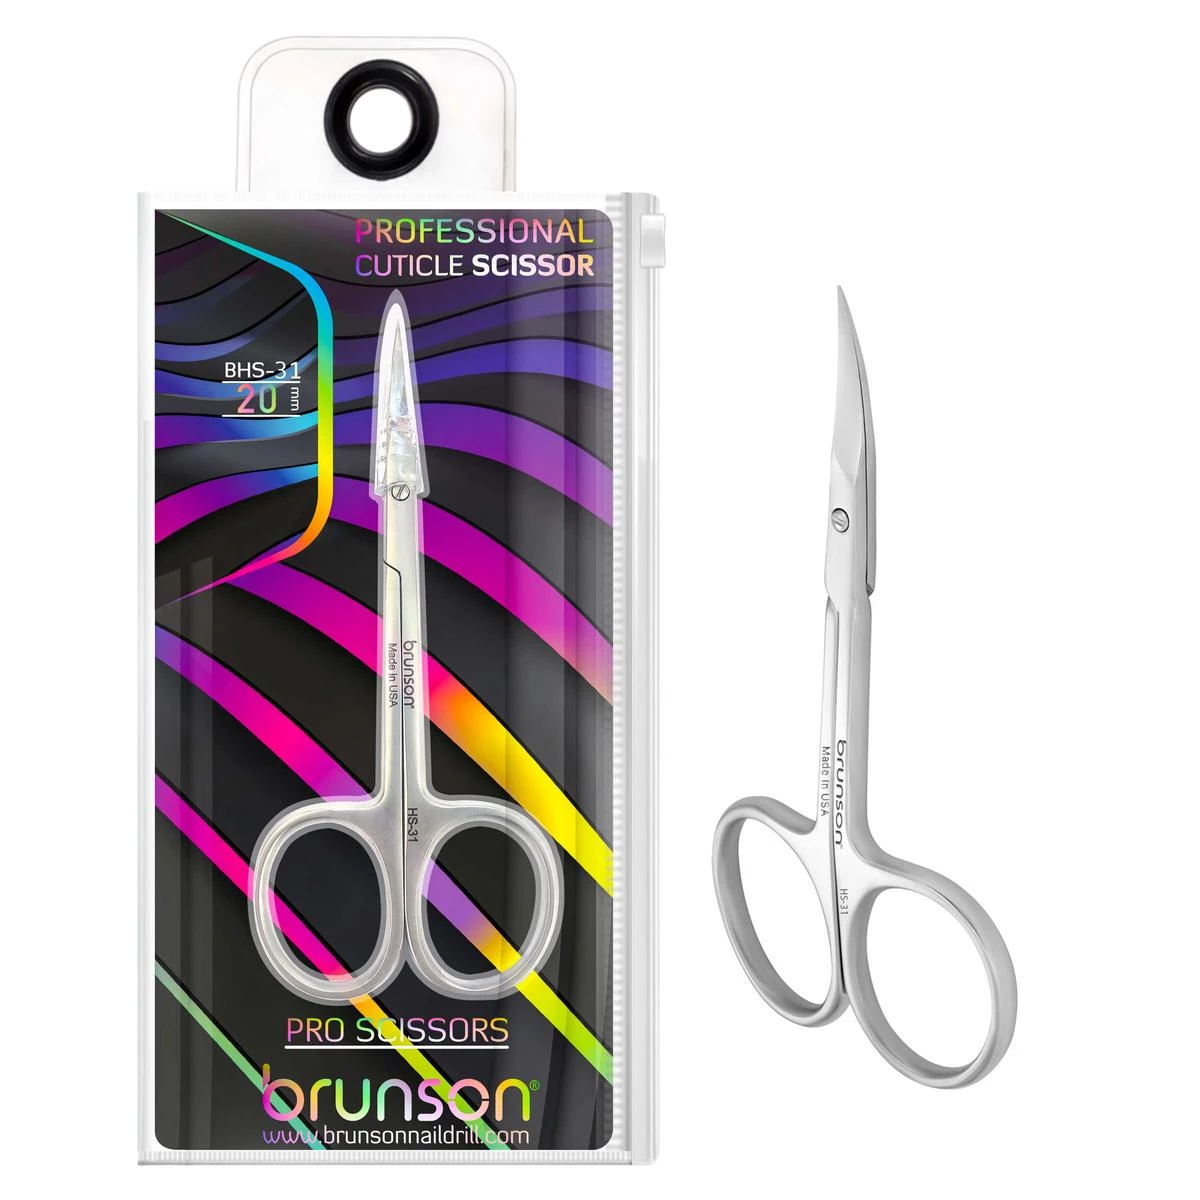 Professional-Cuticle-Scissors-BHS-31-Brunson-1